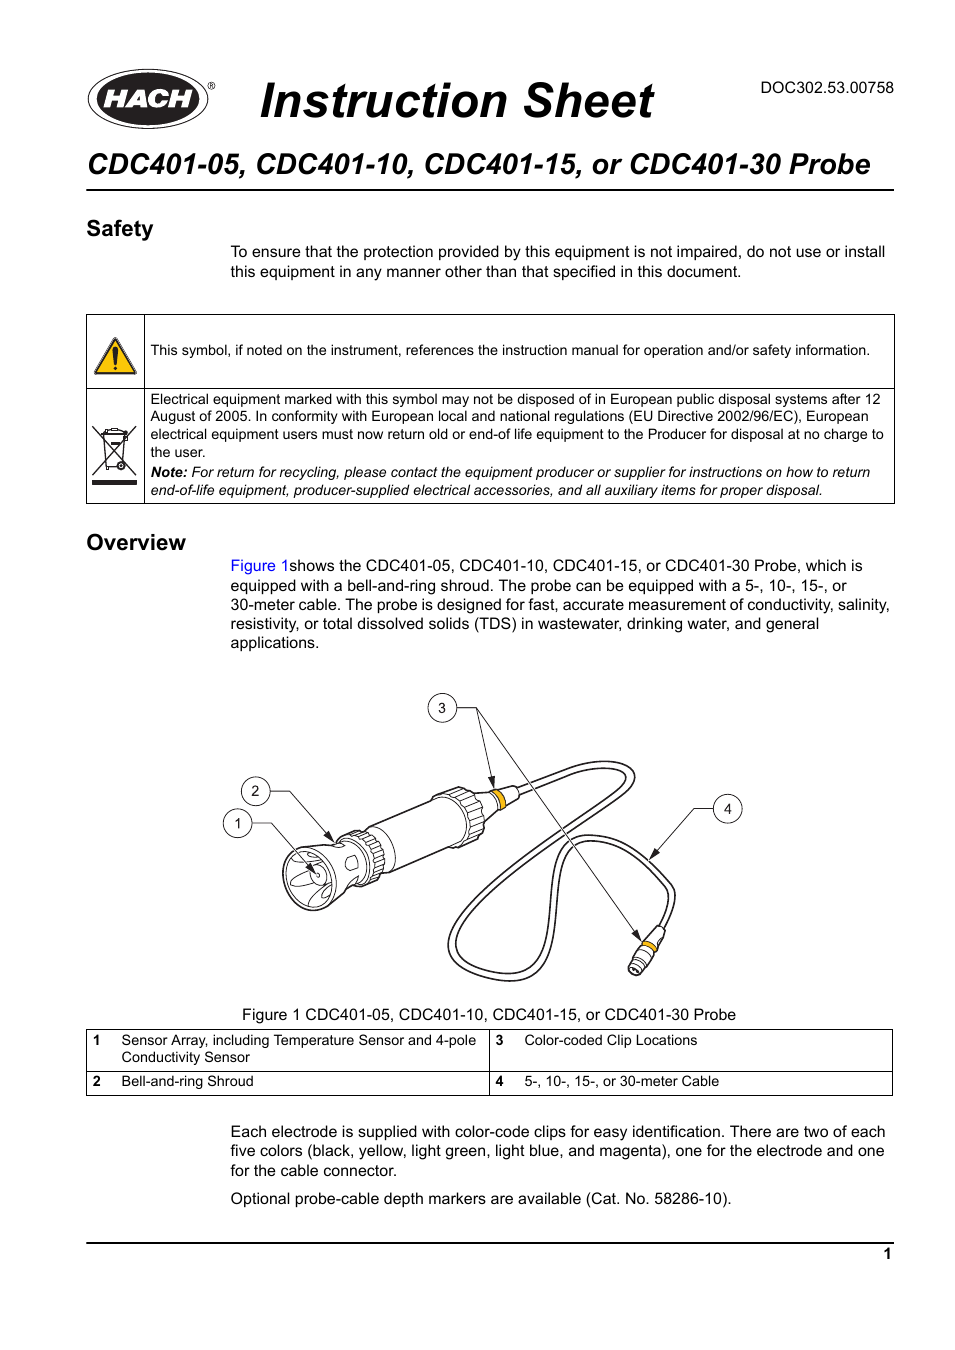 CDC401-05 Instruction Sheet